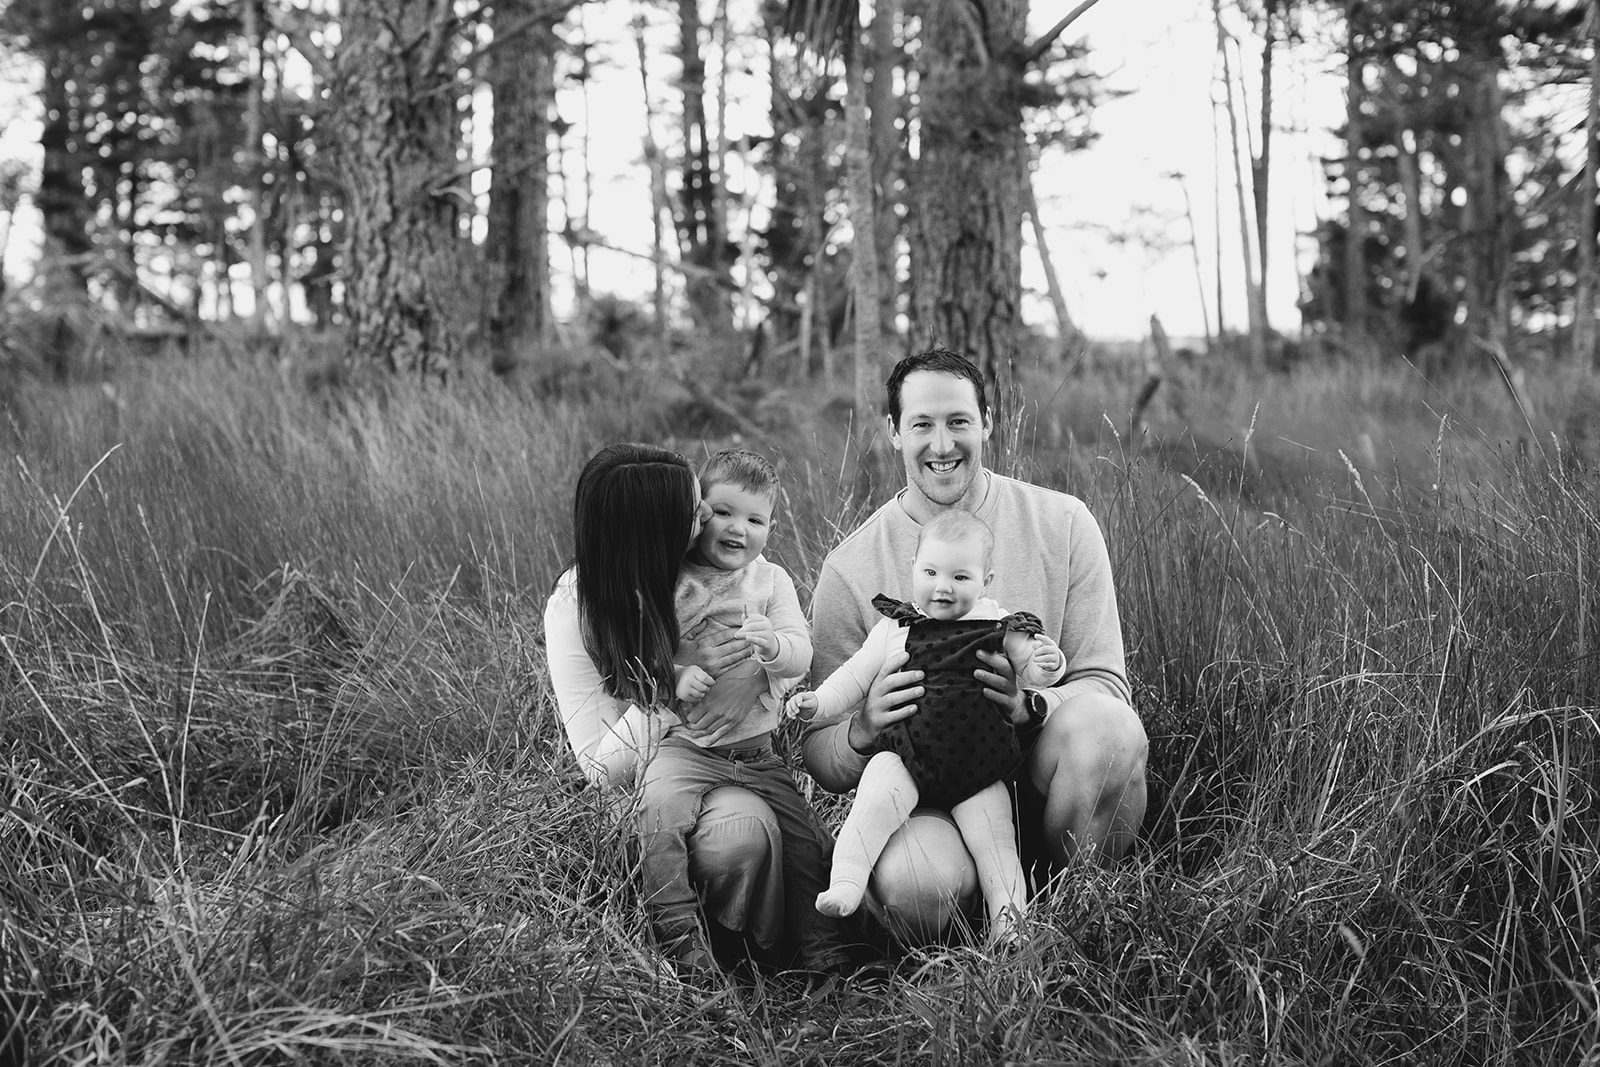 tuapiro reserve family photos